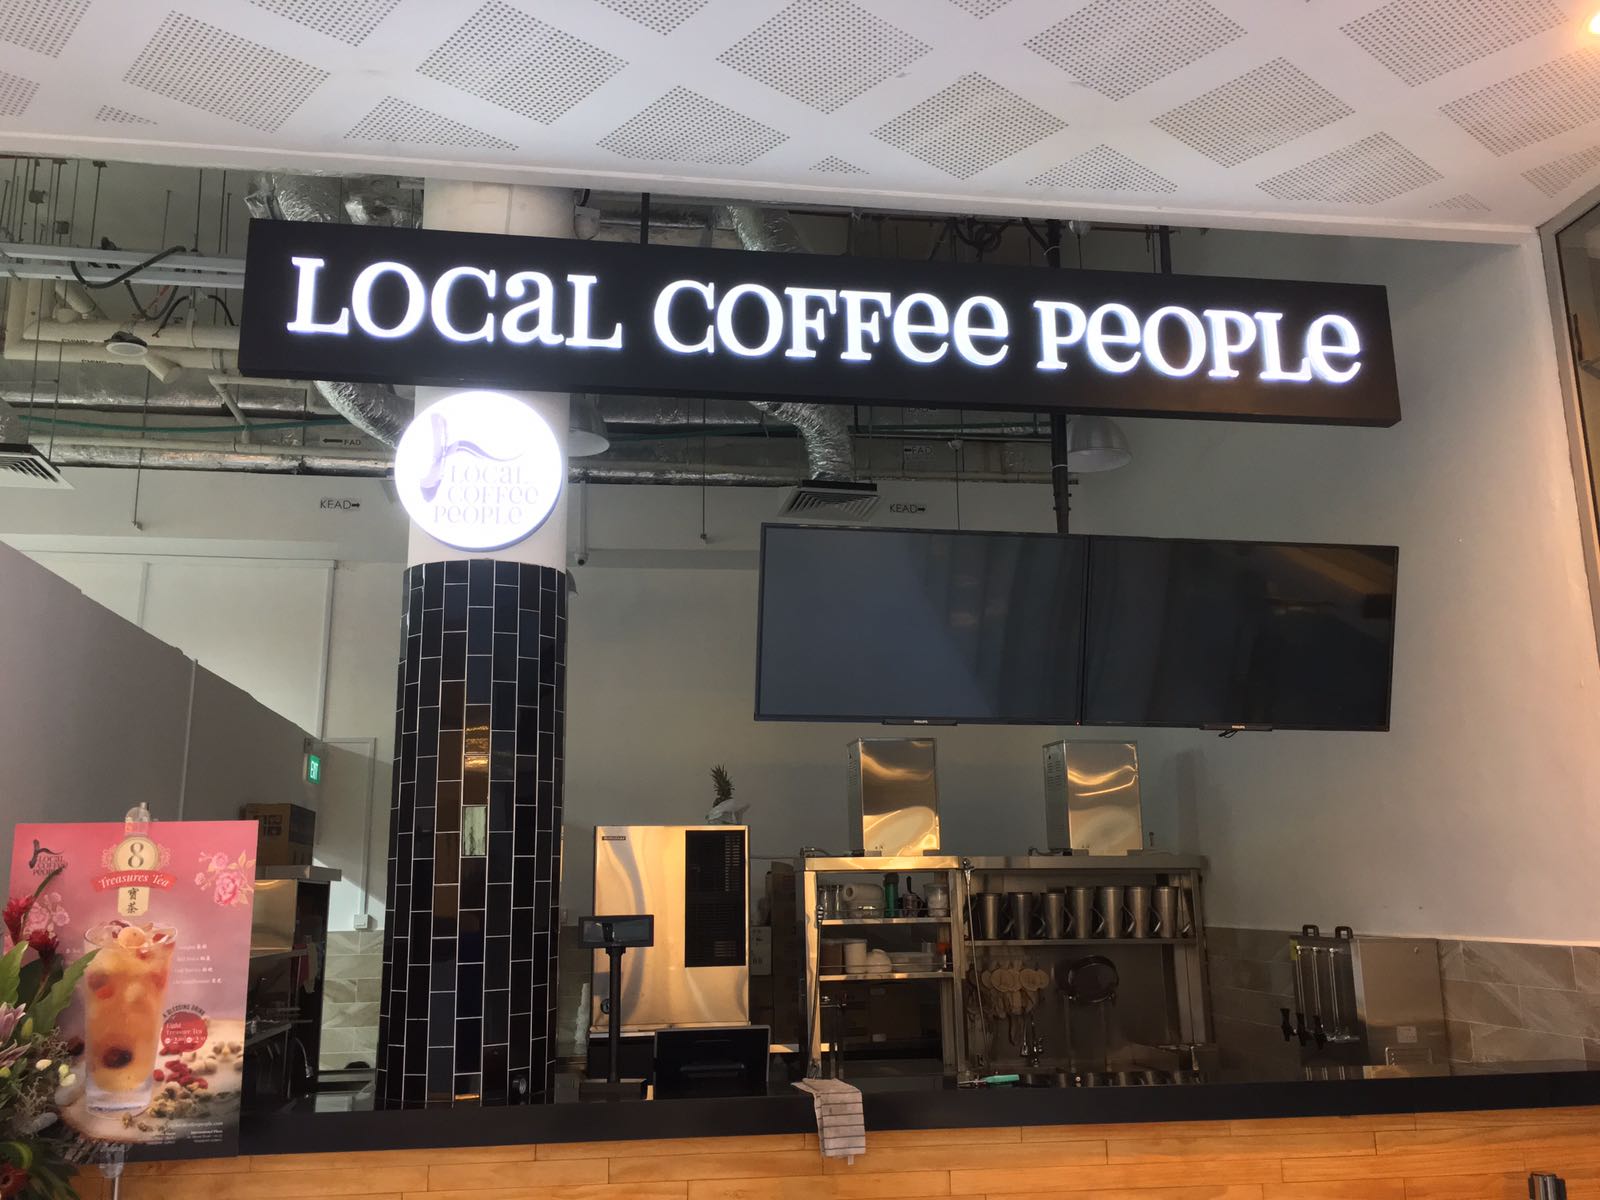 Local Coffee People